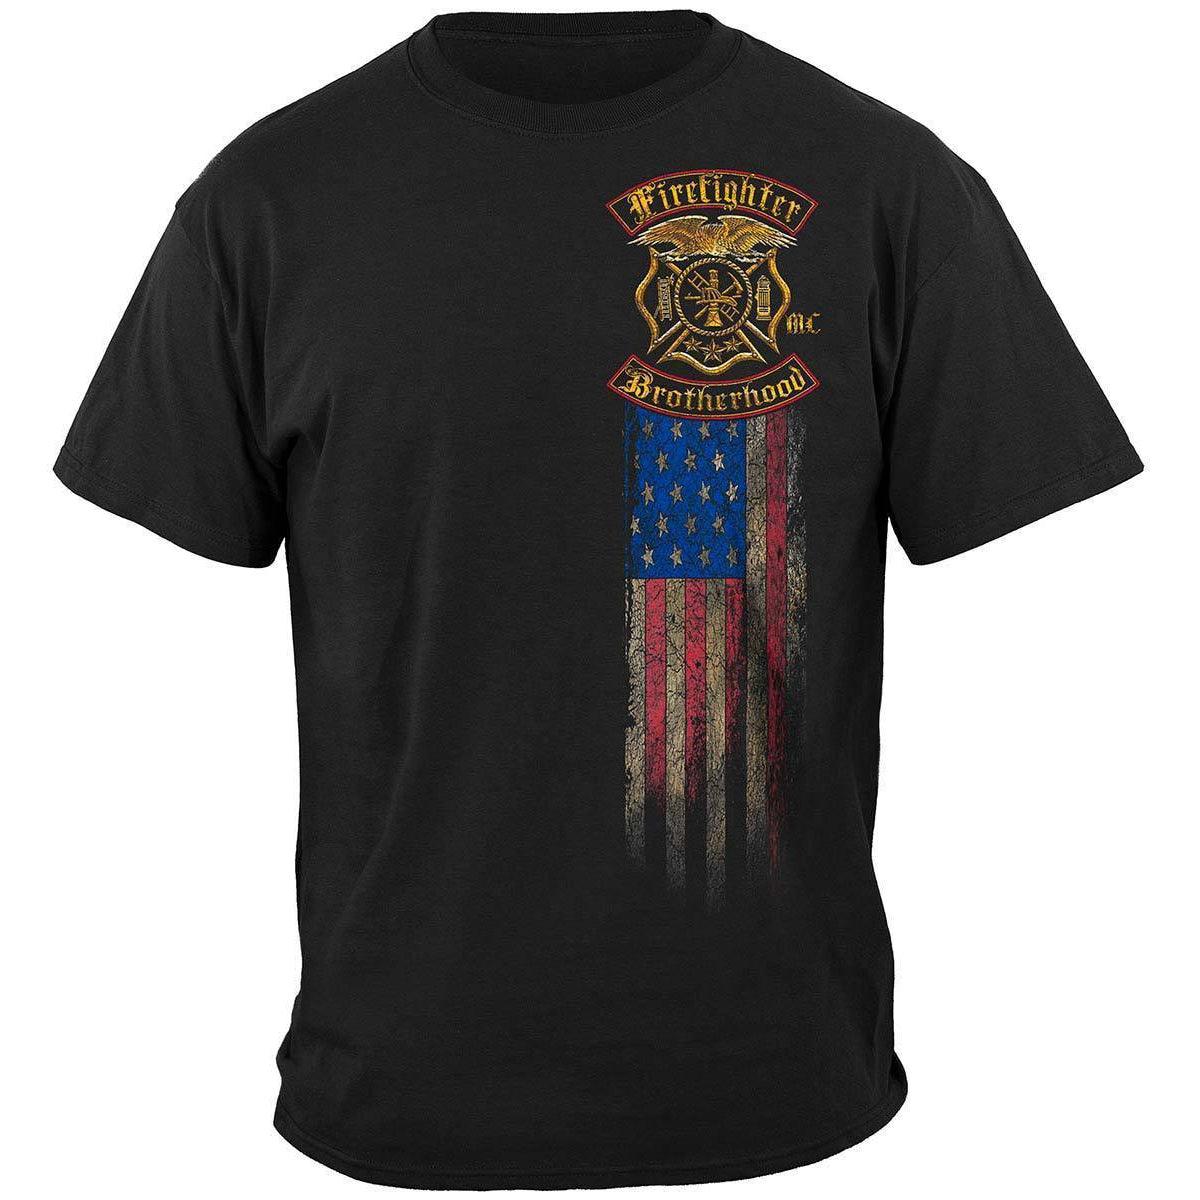 American Firefighter Brotherhood Long Sleeve - Military Republic